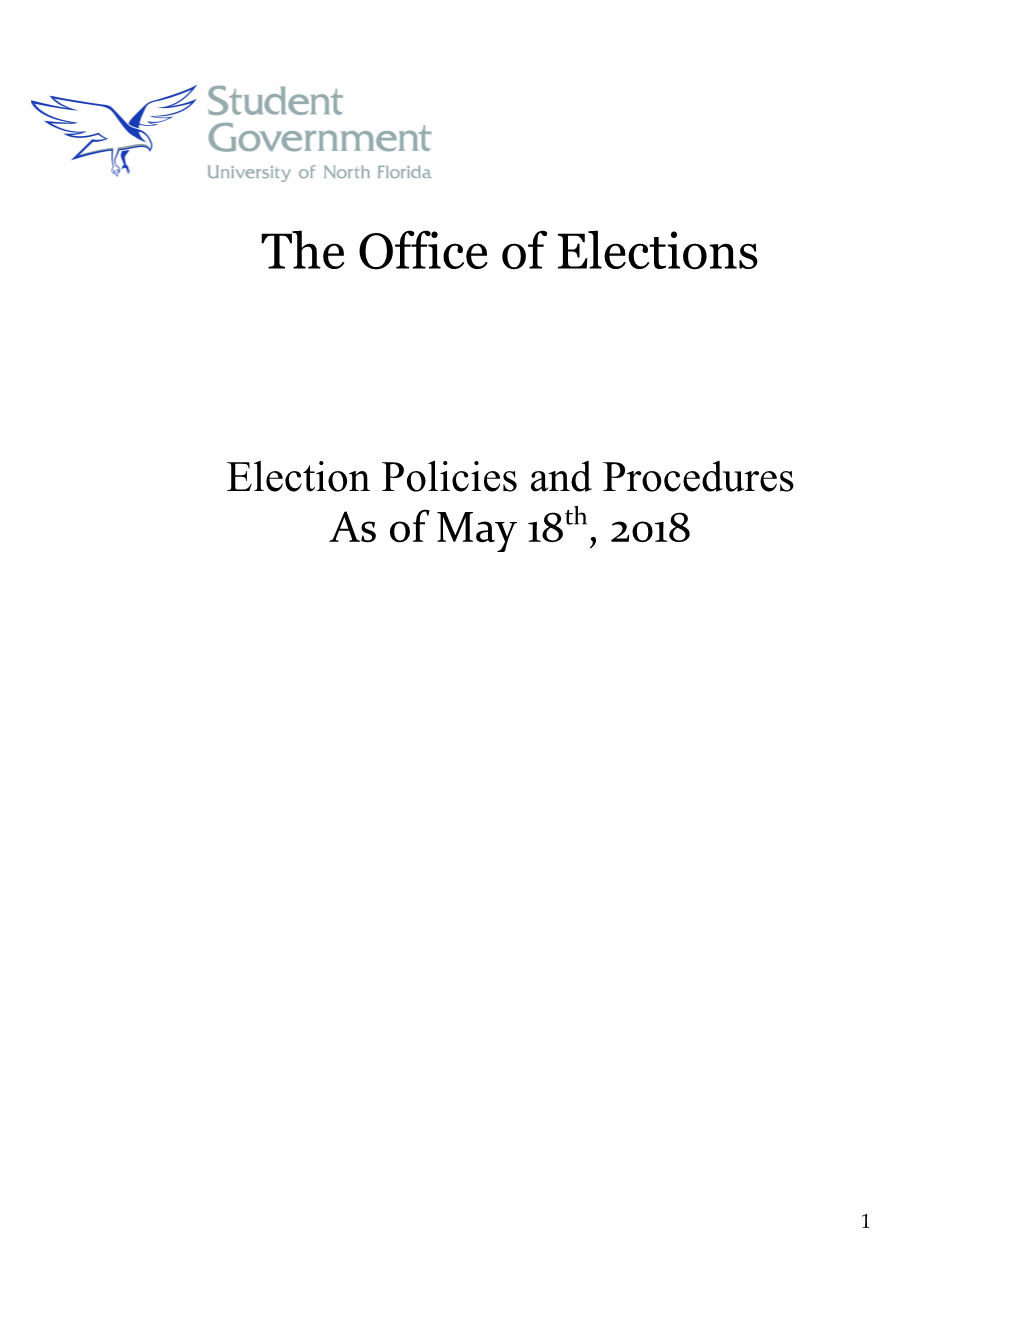 Election Policies and Procedures